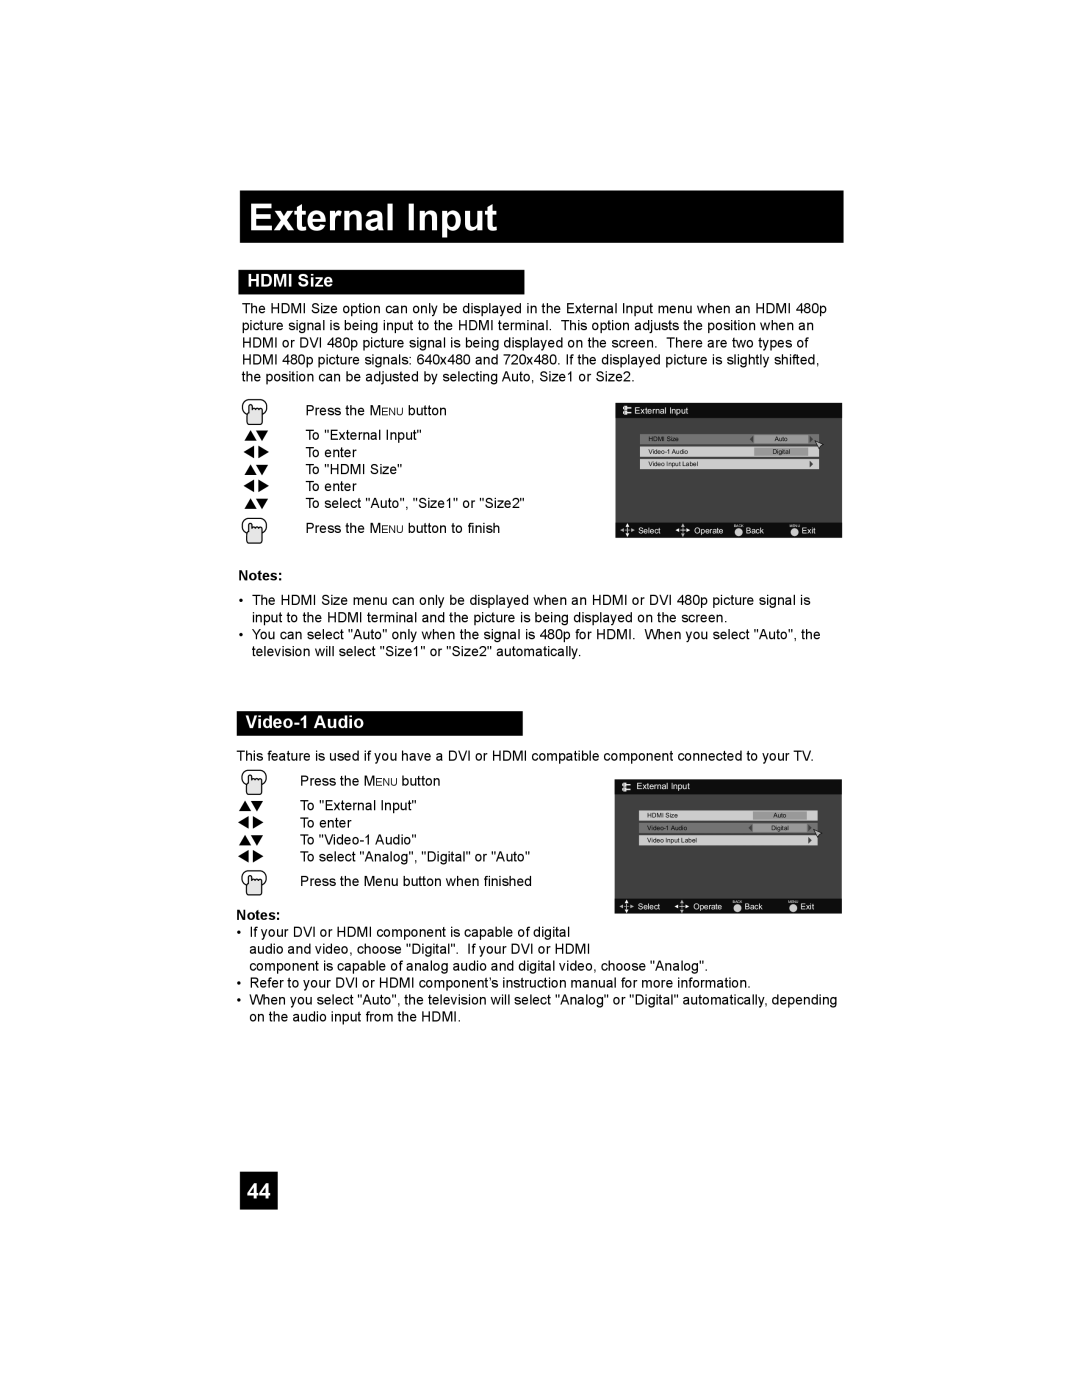 JVC LT-32EX38, LT-42EX38, LT-37EX38 manual External Input, HDMI Size, Video-1 Audio 